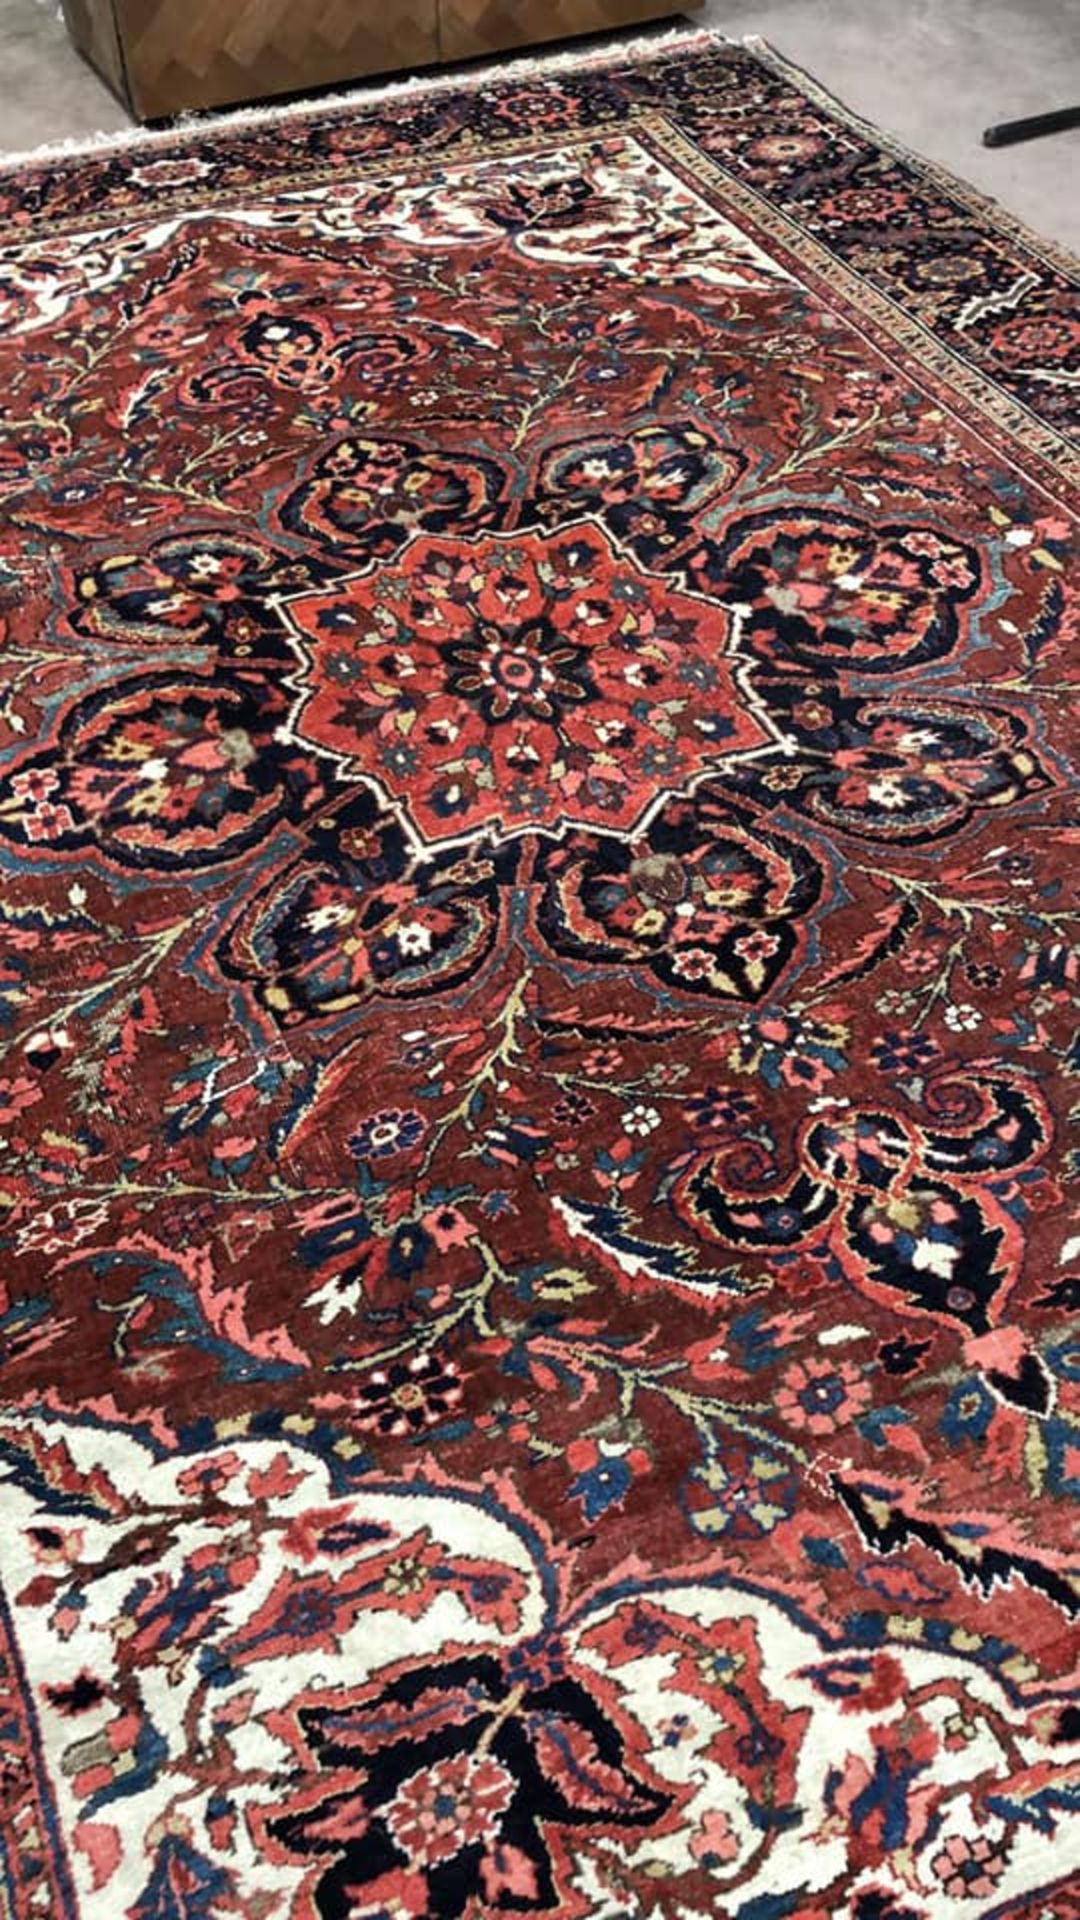 Hand Made Iranian Helix Carpet 351 X 259cm - Image 2 of 2